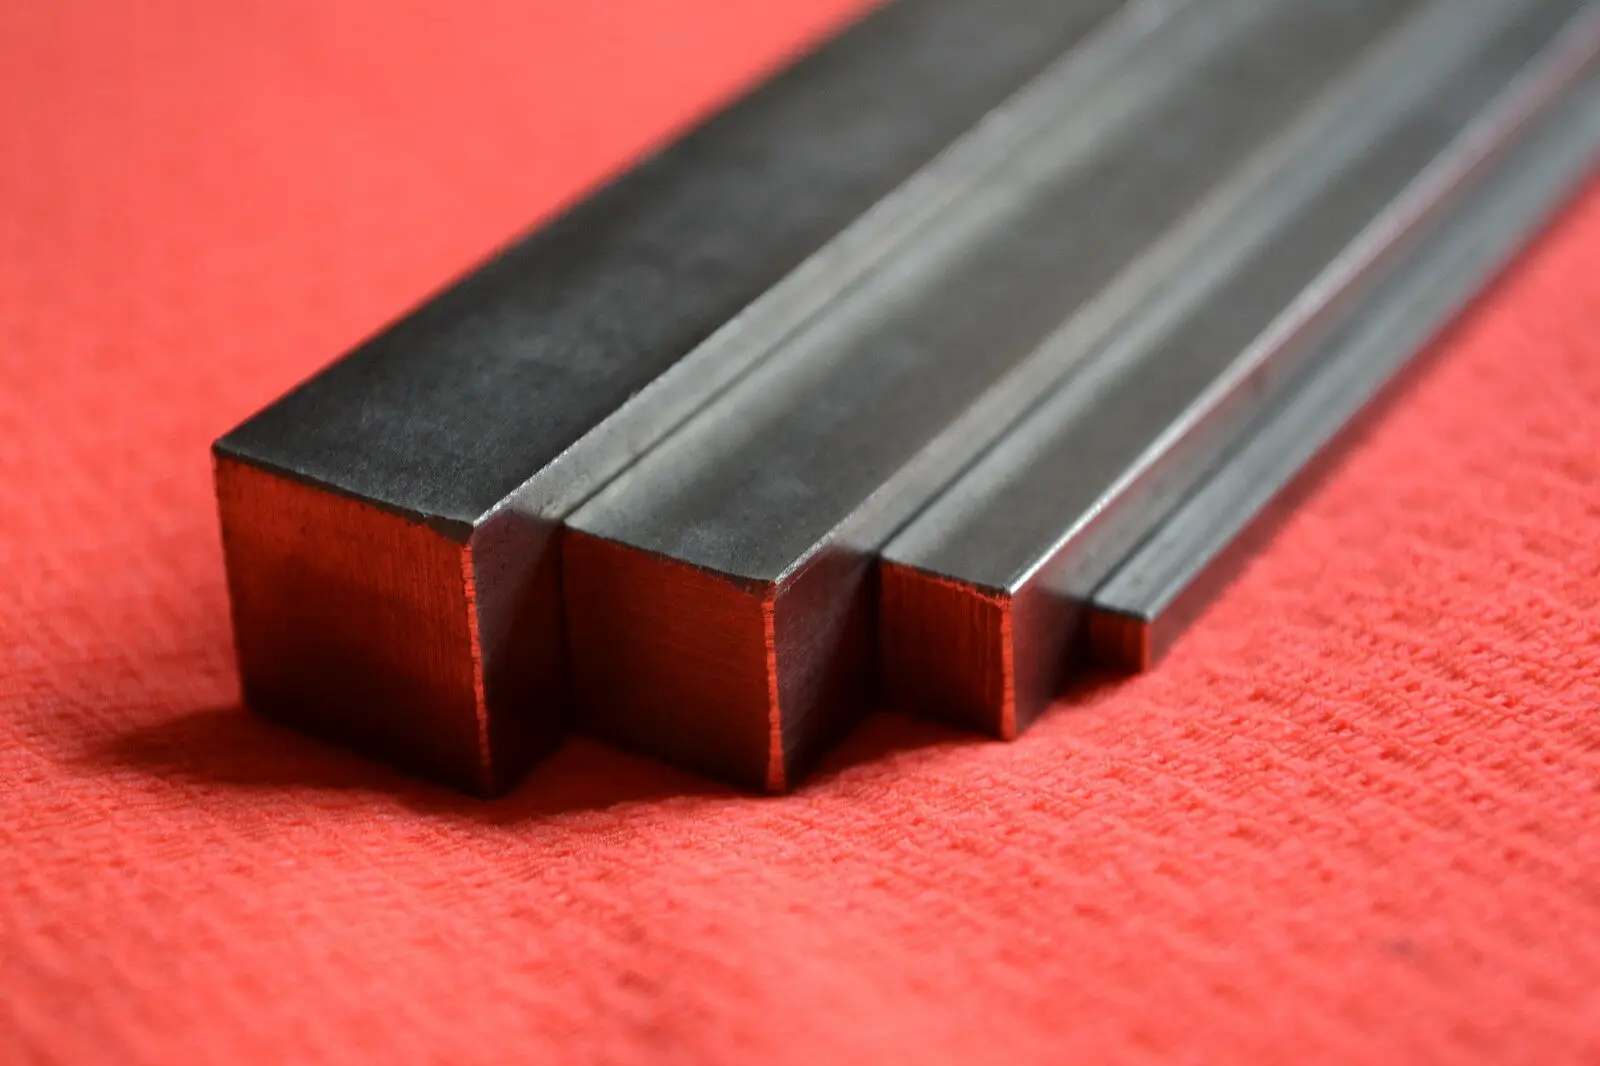 

2pcs 300mm 304 Stainless Steel Square Bar Rod MODEL MAKERS 5mm 6mm 7mm 8mm 10mm 12mm 15mm 18mm Flat Shaft Stock Customize L